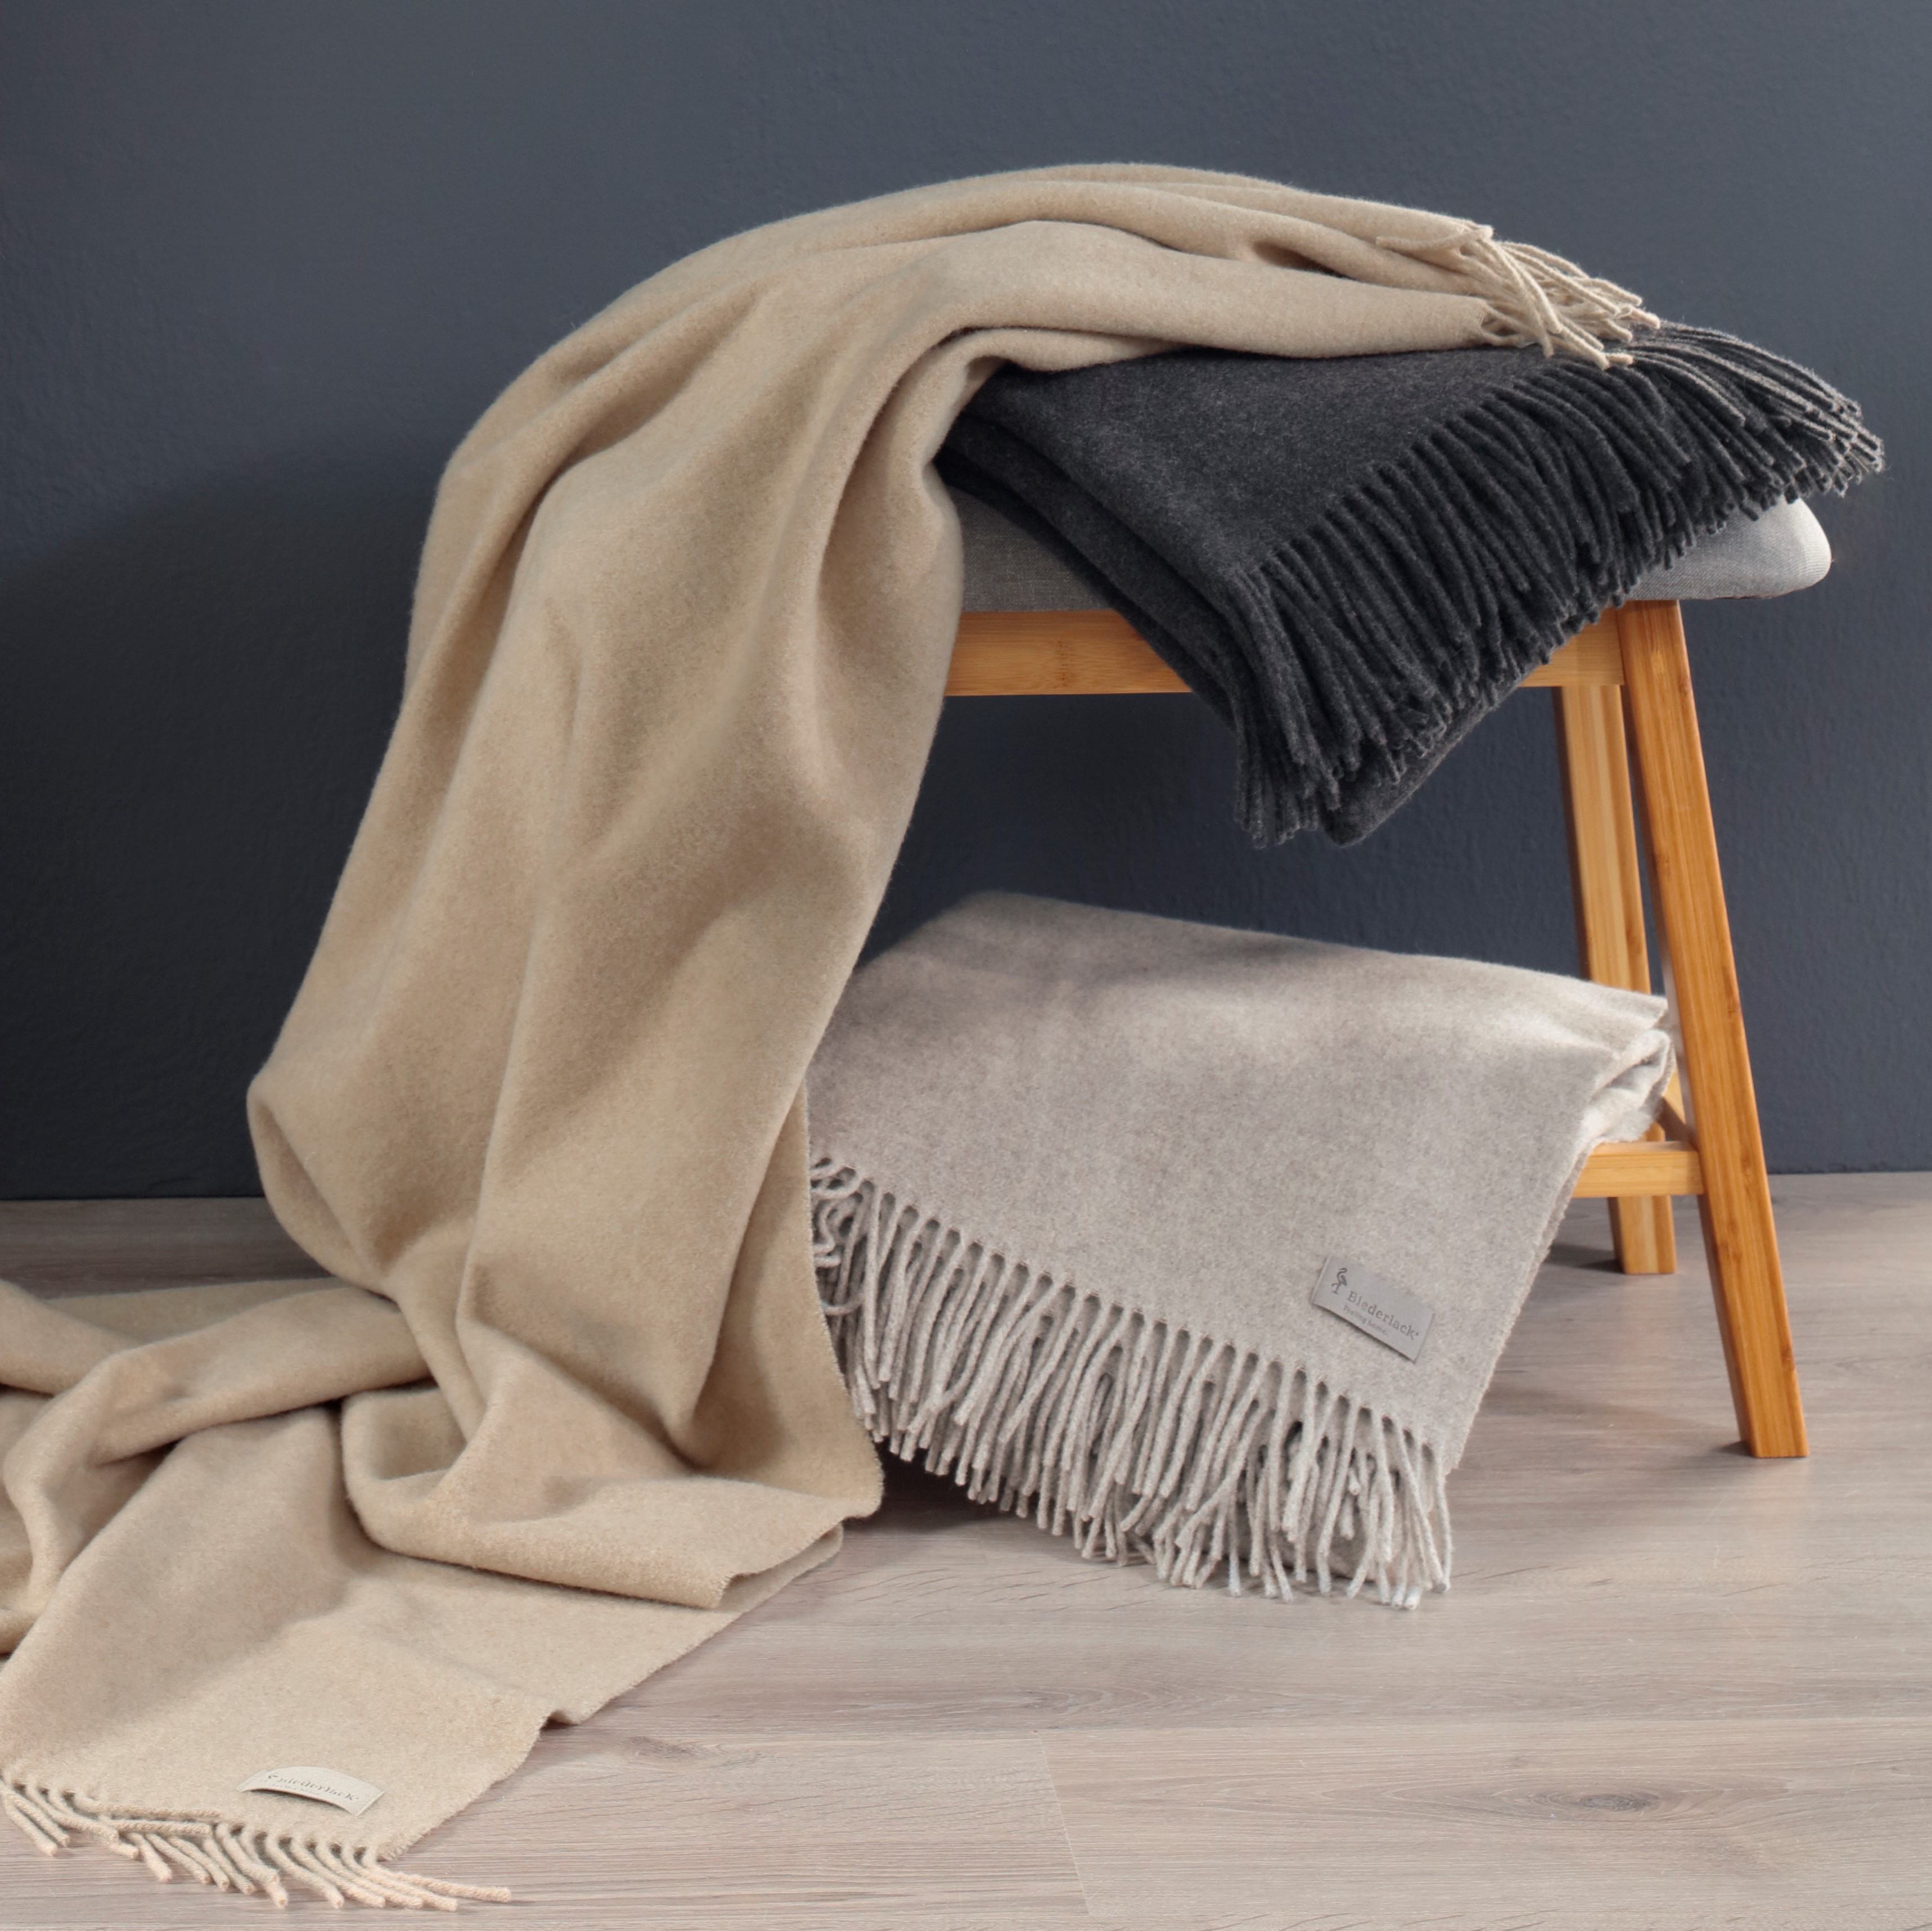 Shop of Favourites - Wool Biederlack Sofa - The | Plaid Grey Couchdecken.de Blanket